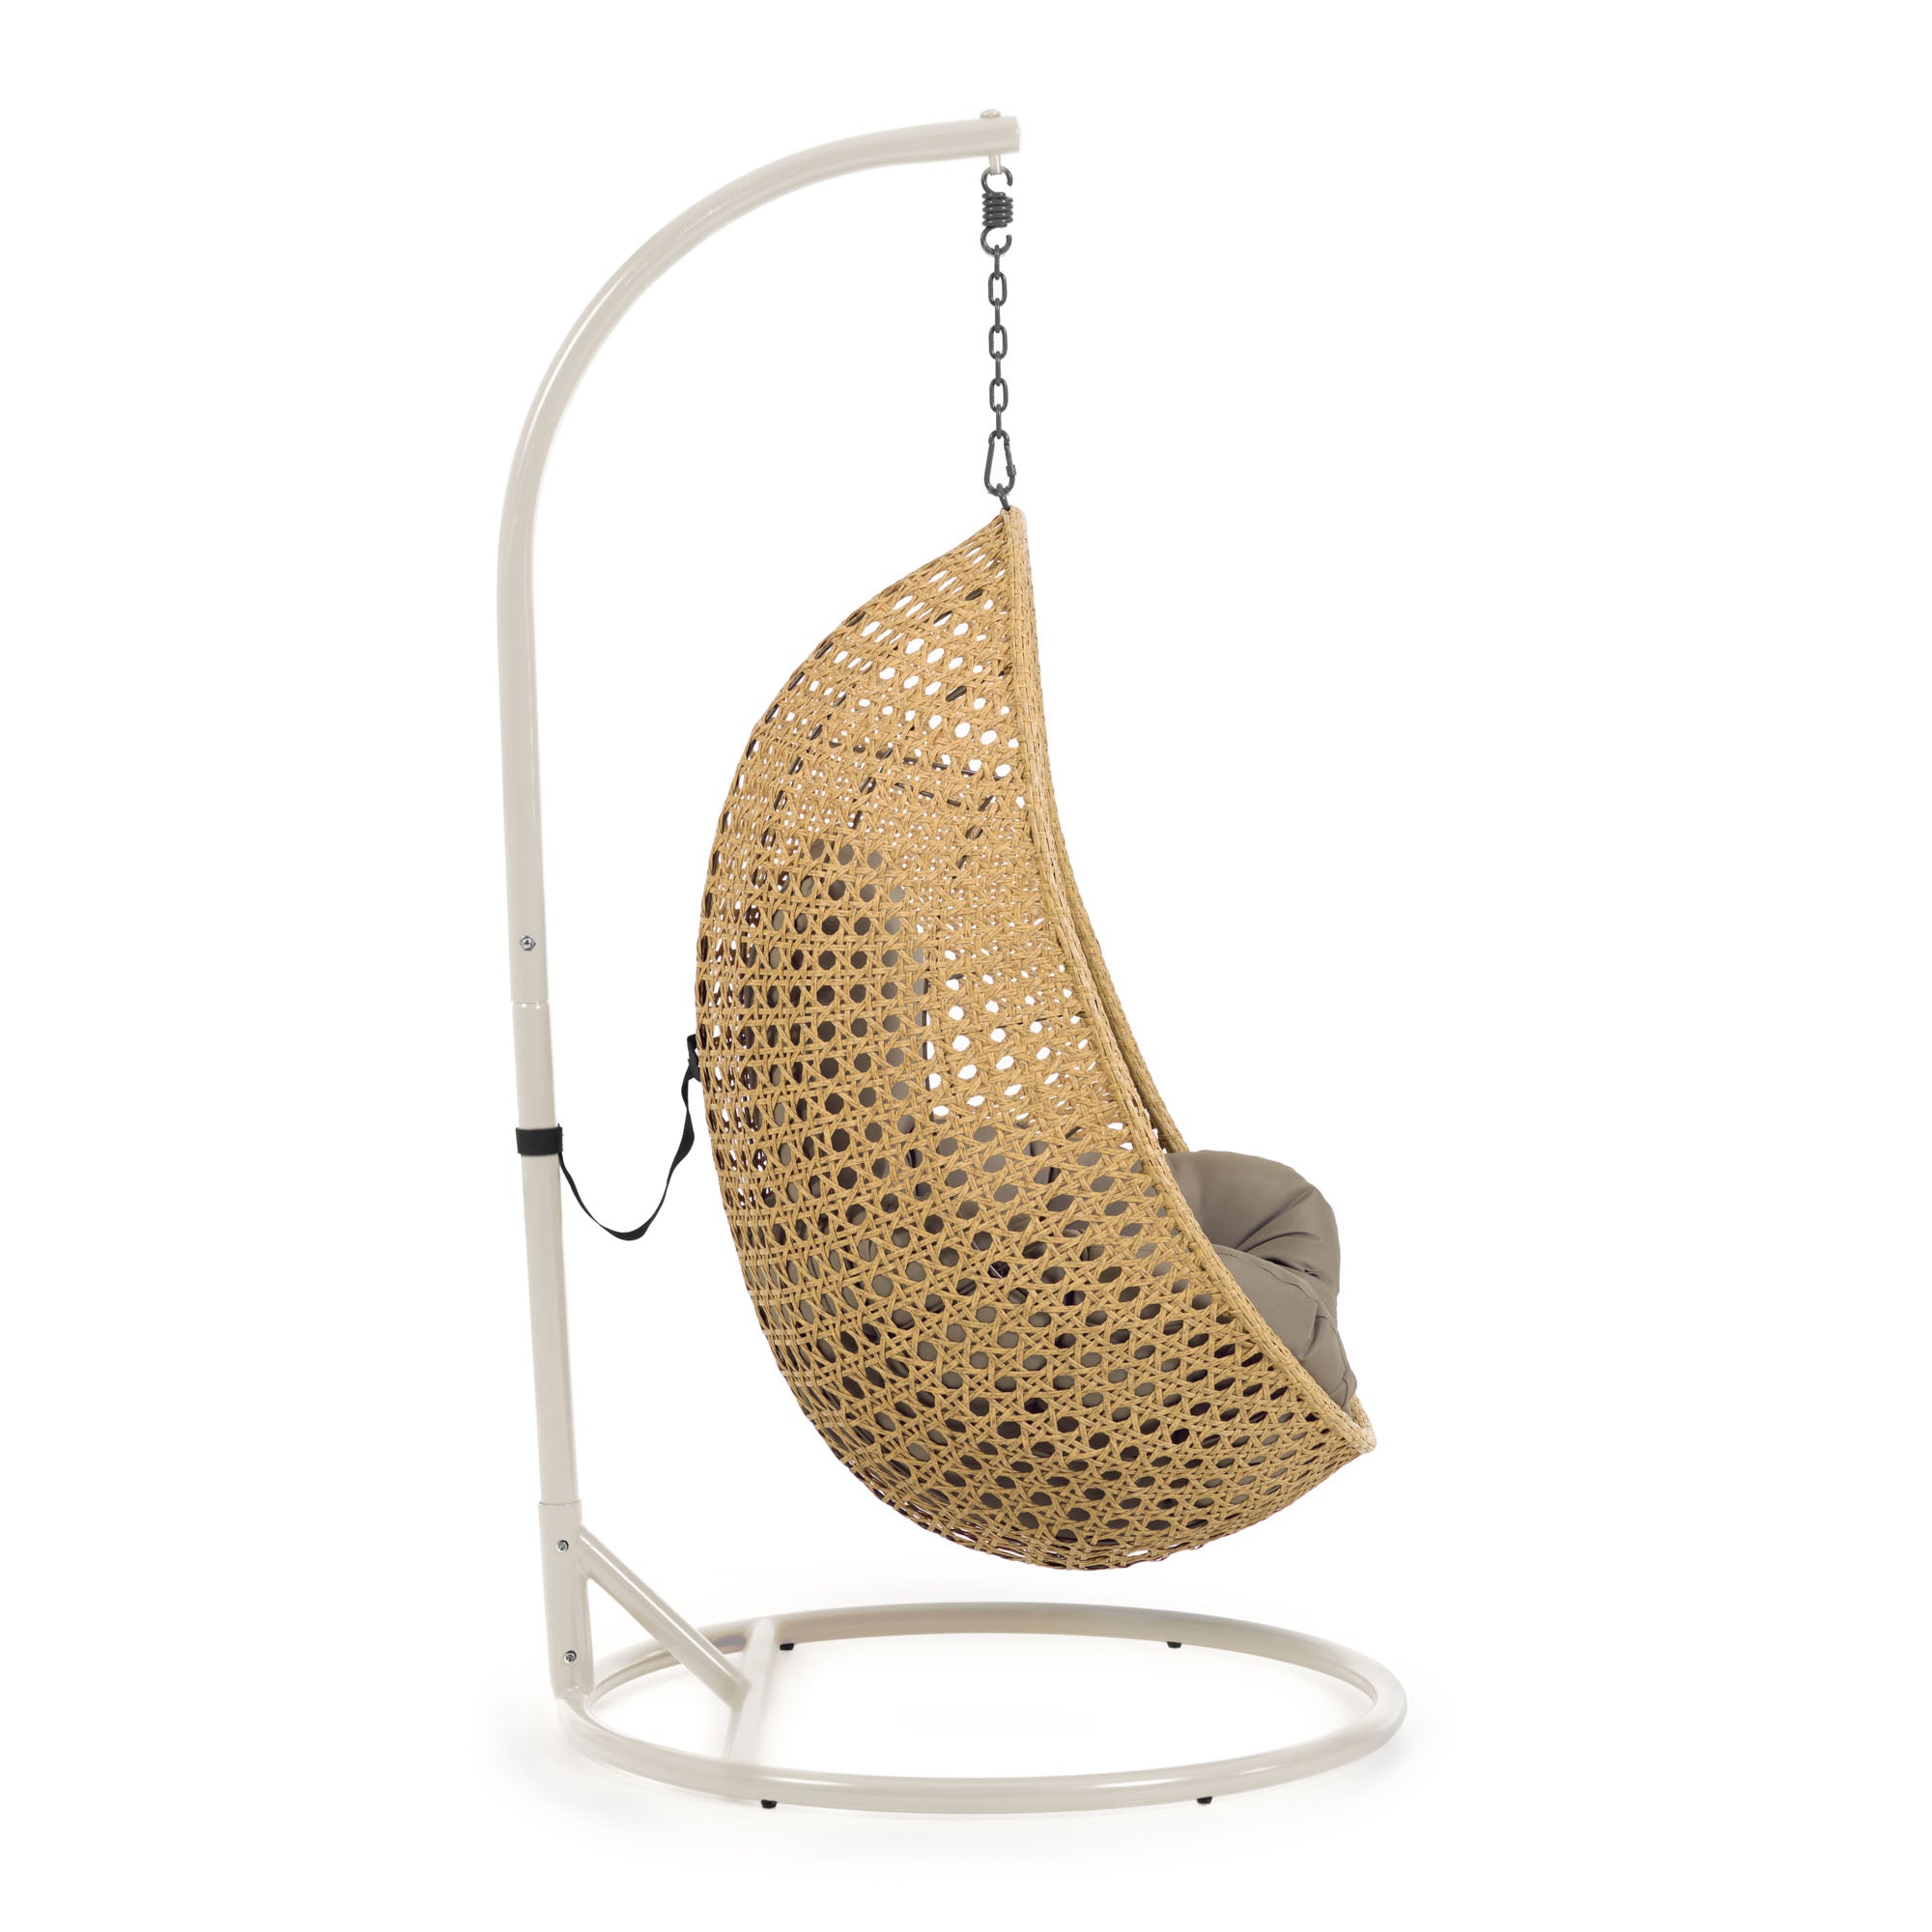 Cira light grey hanging armchair with natural finish